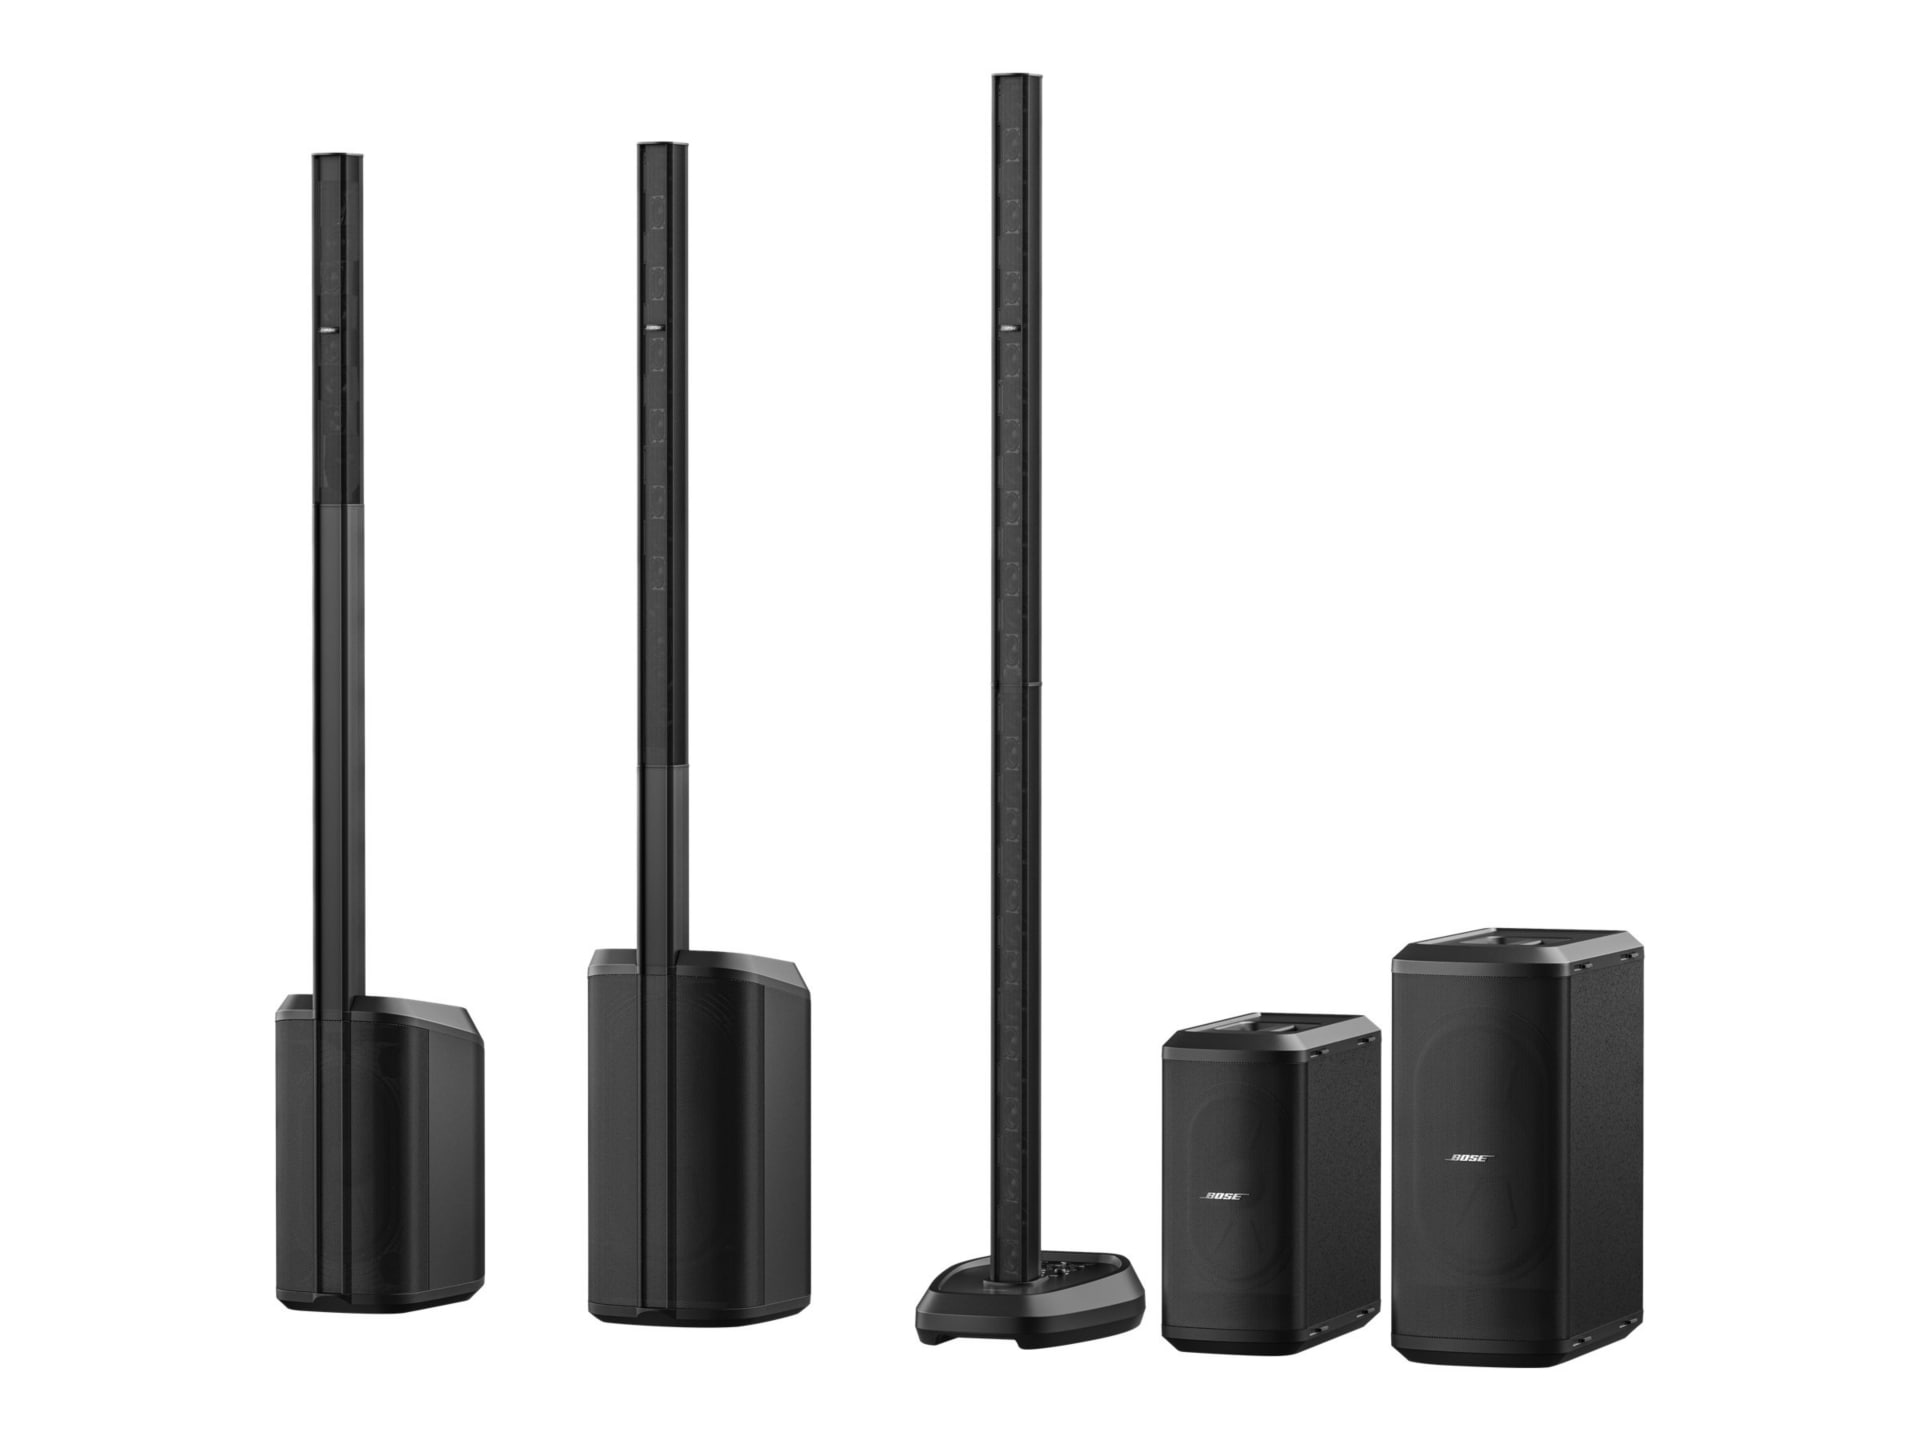 Nonsens Mundtlig orm Bose L1 Pro8 - speaker system - for stage - wireless - 840919-1100 -  Speakers - CDW.com